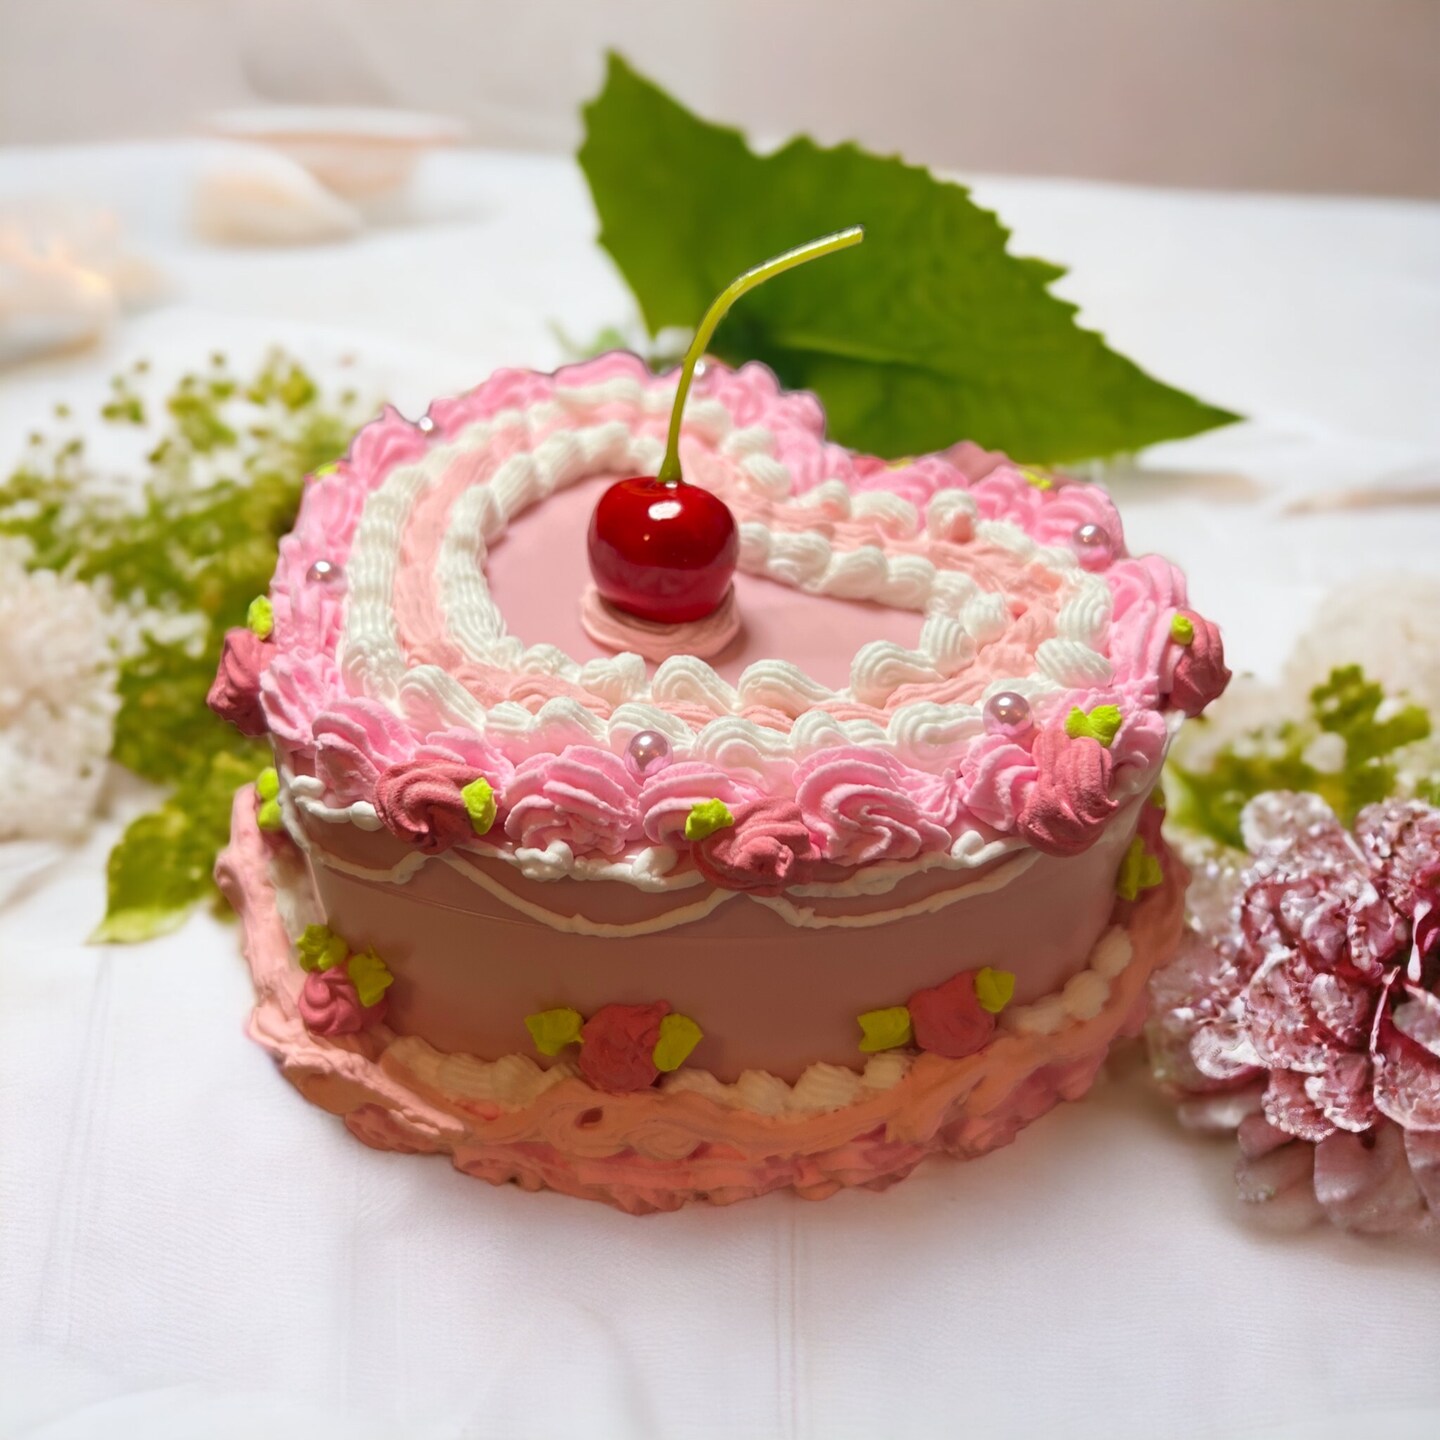 VINTAGE CHERRY CAKE – my favorite cake